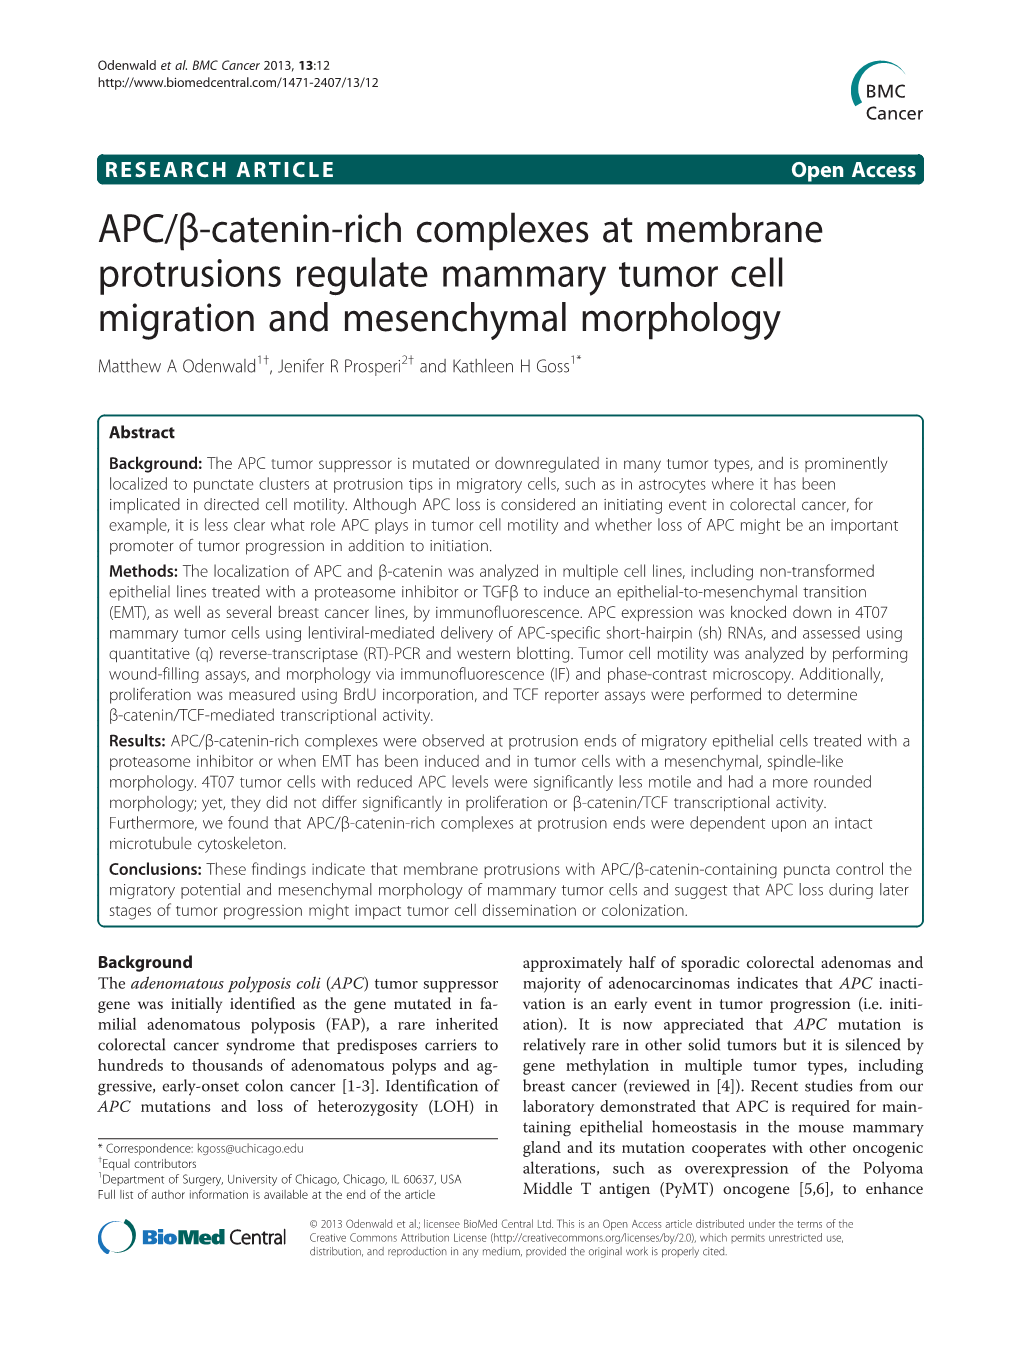 APC/Β-Catenin-Rich Complexes at Membrane